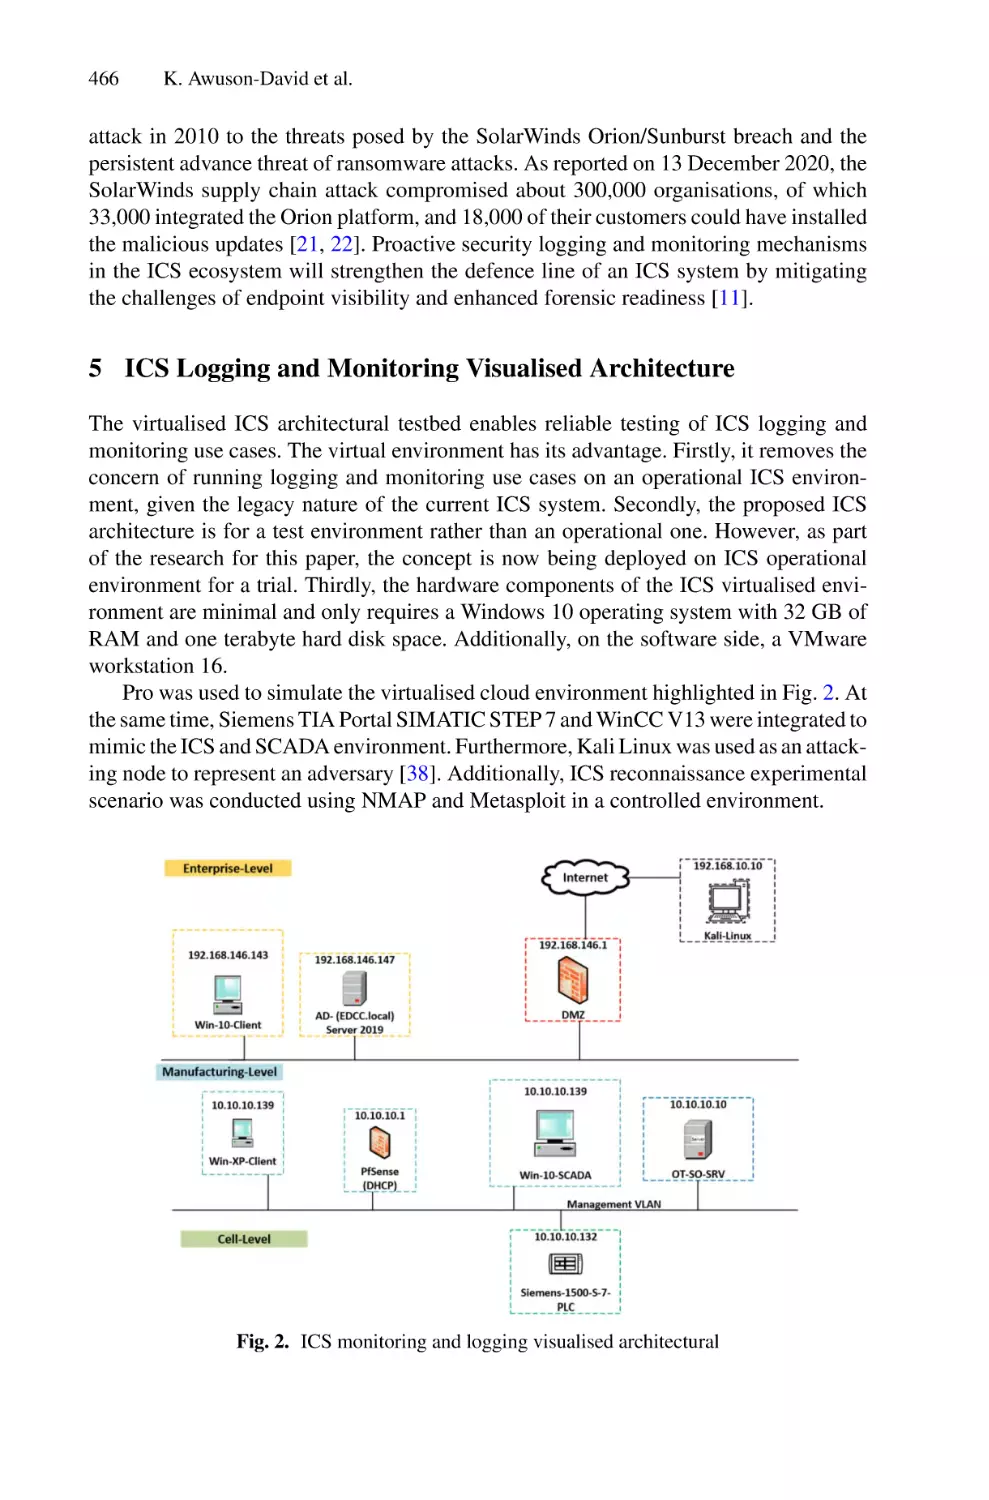 5 ICS Logging and Monitoring Visualised Architecture